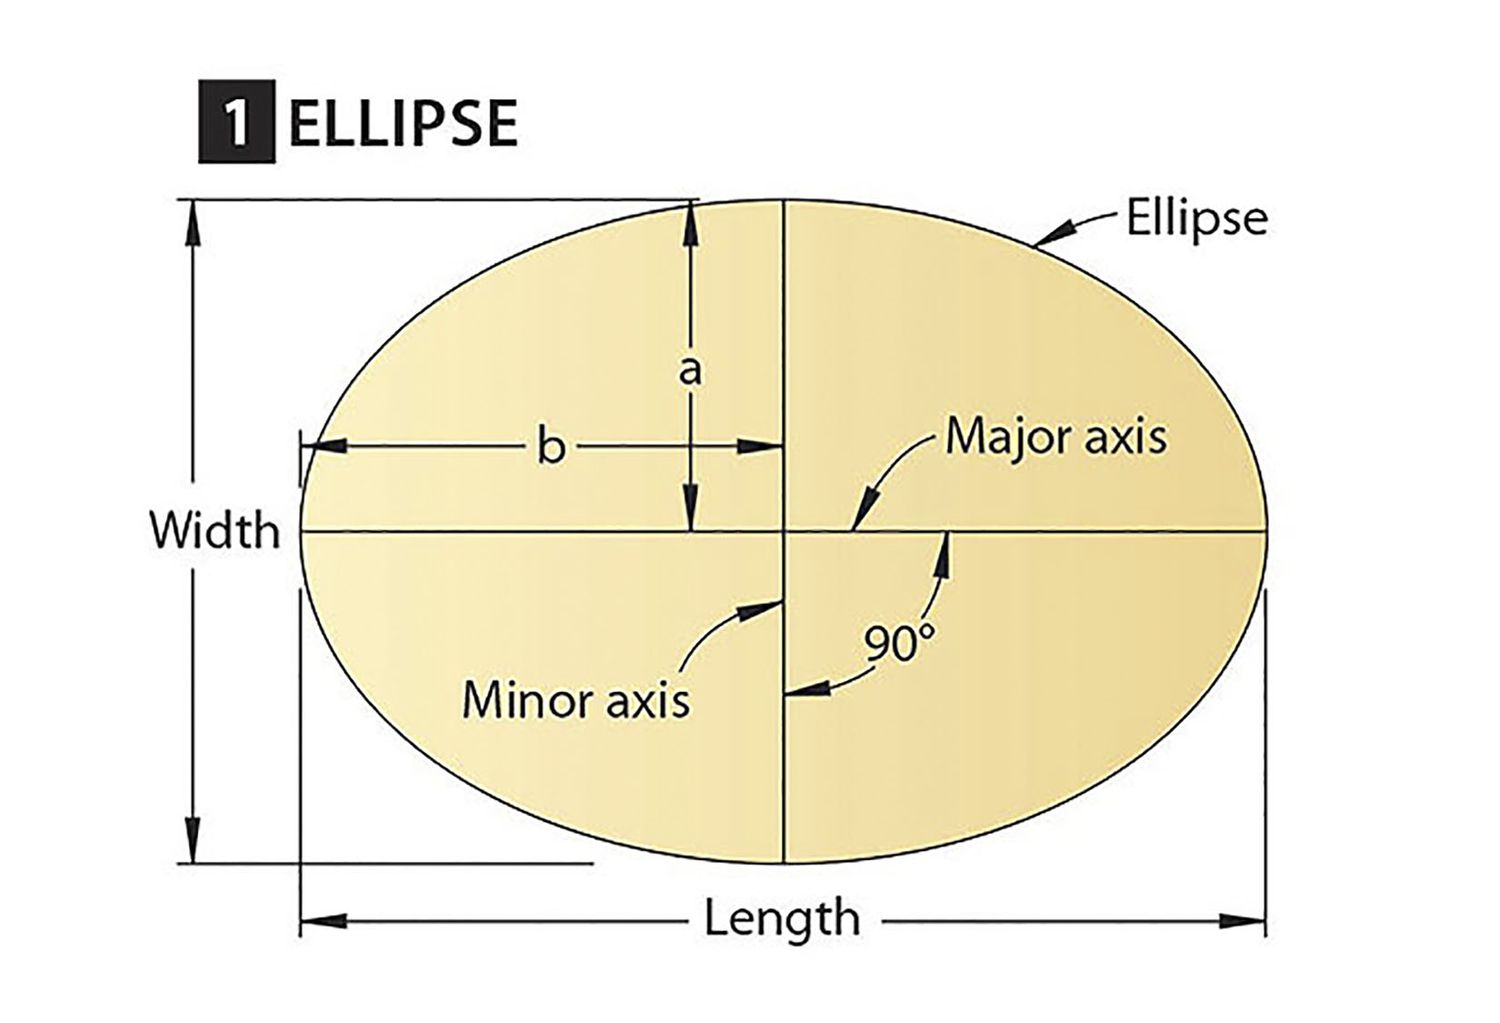 Image icon ellipse.jpg